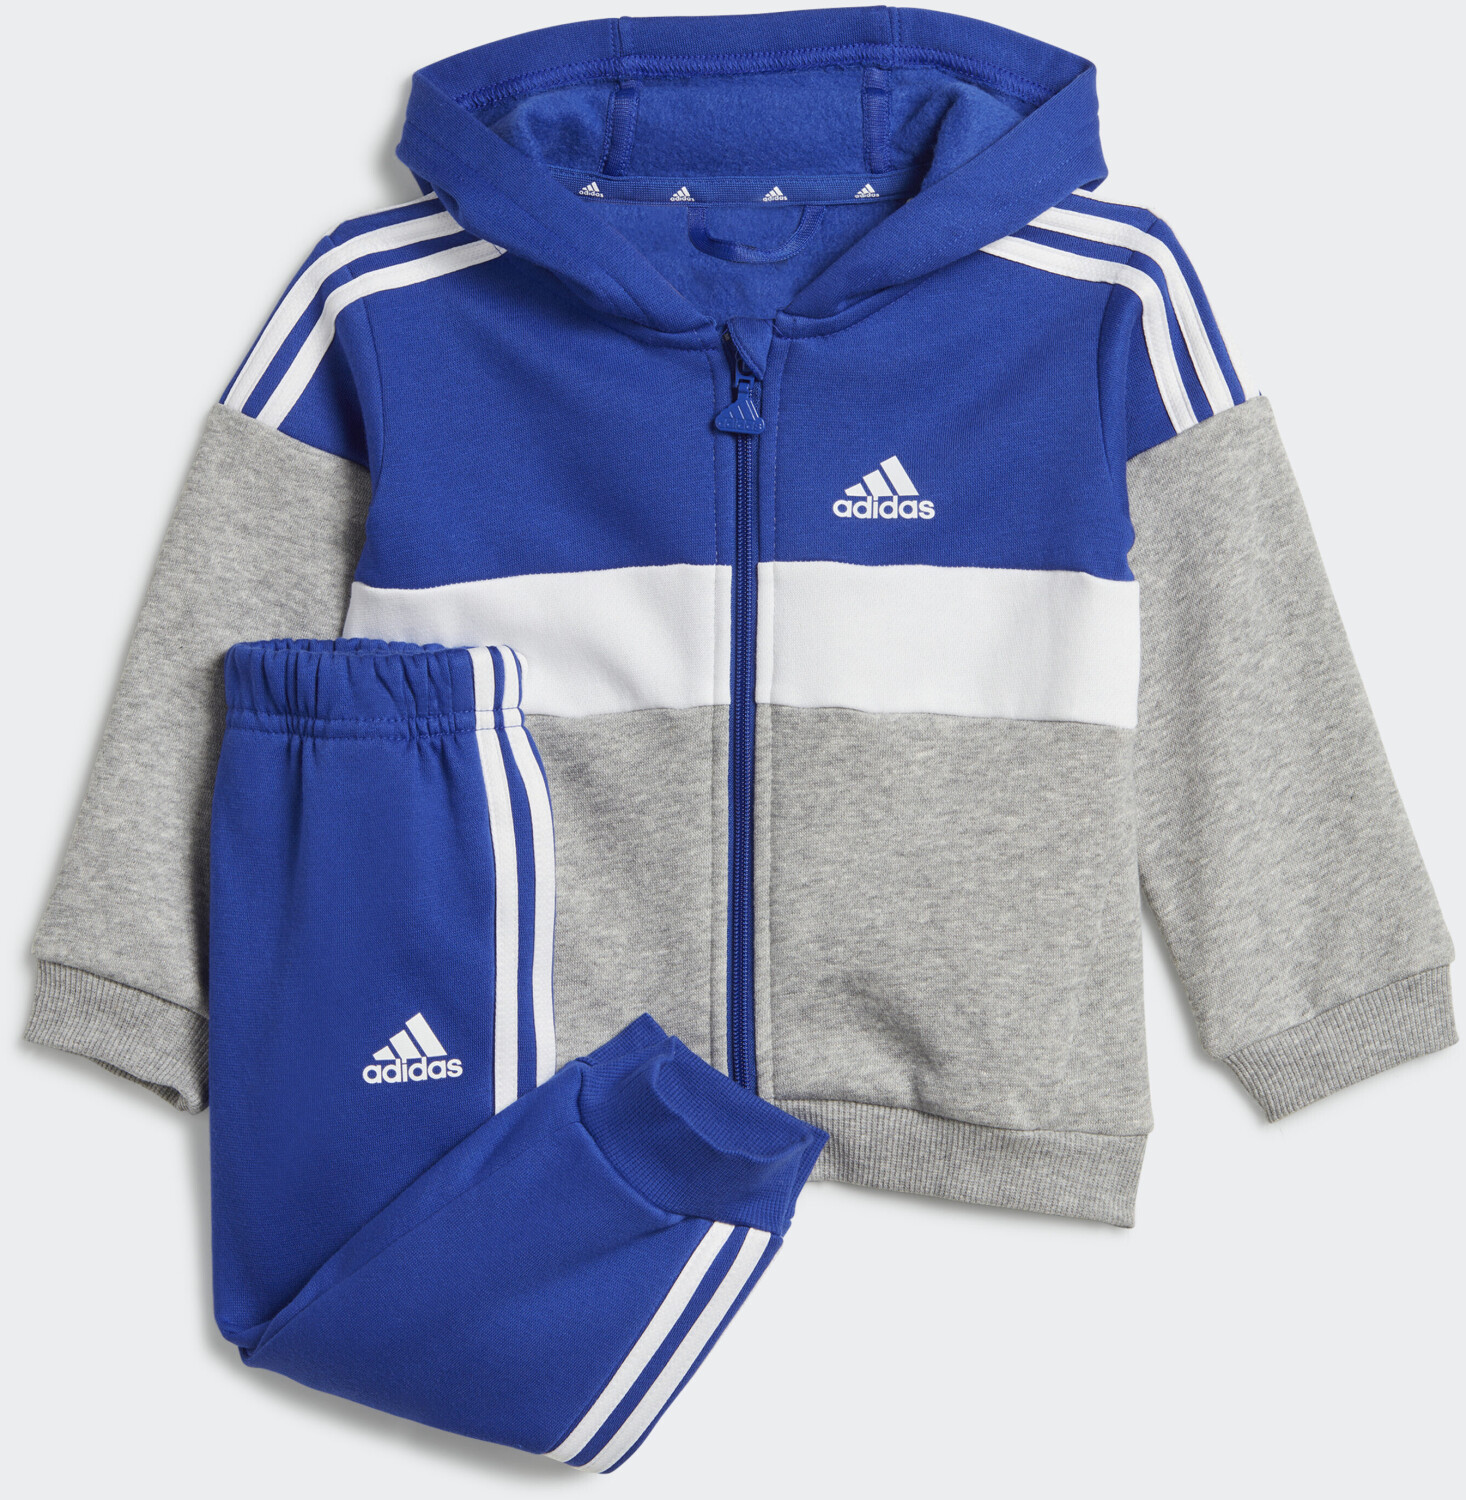 Adidas Kids Tiberio 3-Stripes lucid Preisvergleich Kids Suit 34,00 heather blue/white/medium semi (IJ6323) Colorblock | € ab Track grey bei